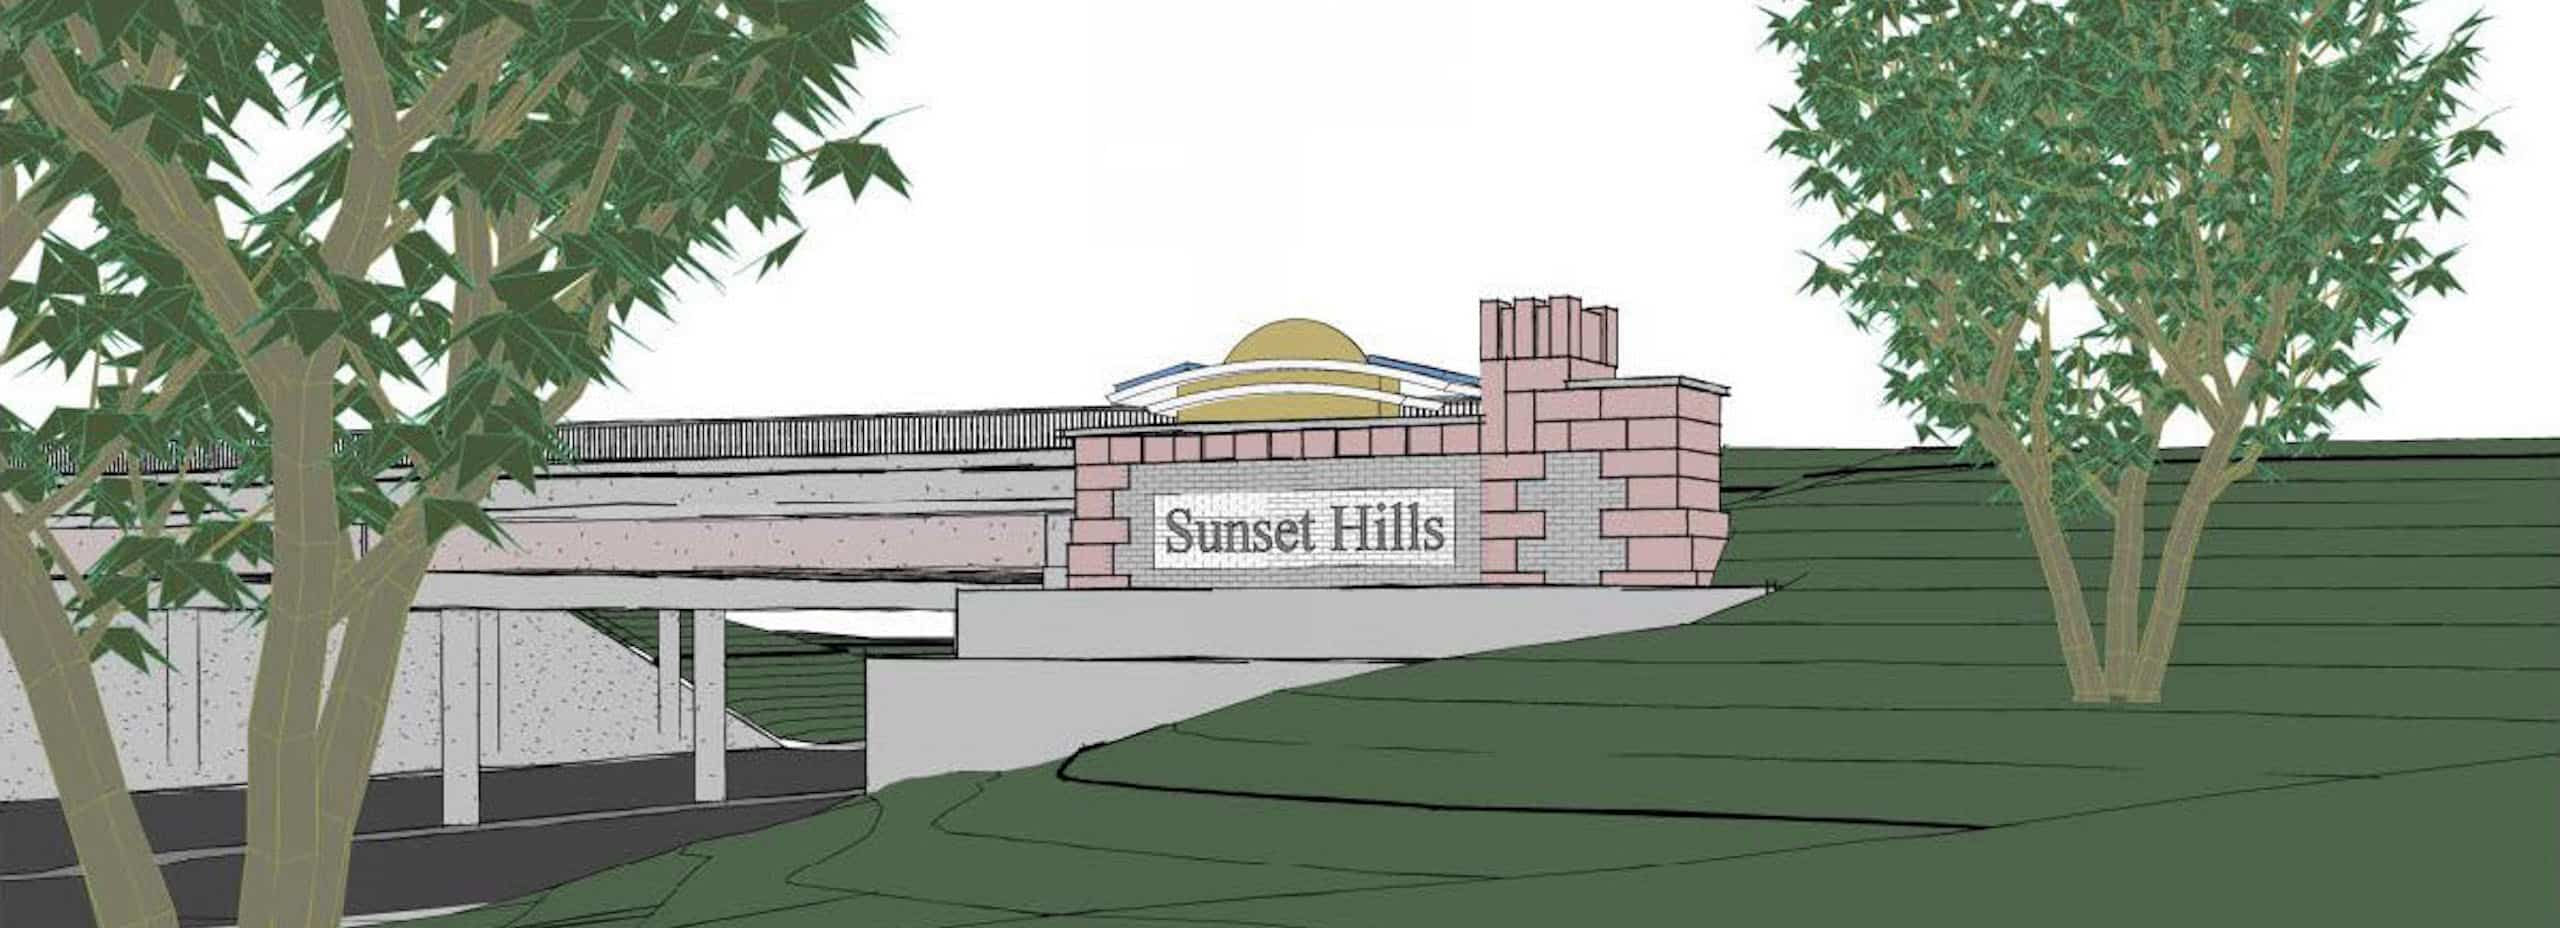 Sunset Hills Overpass Design Rendering